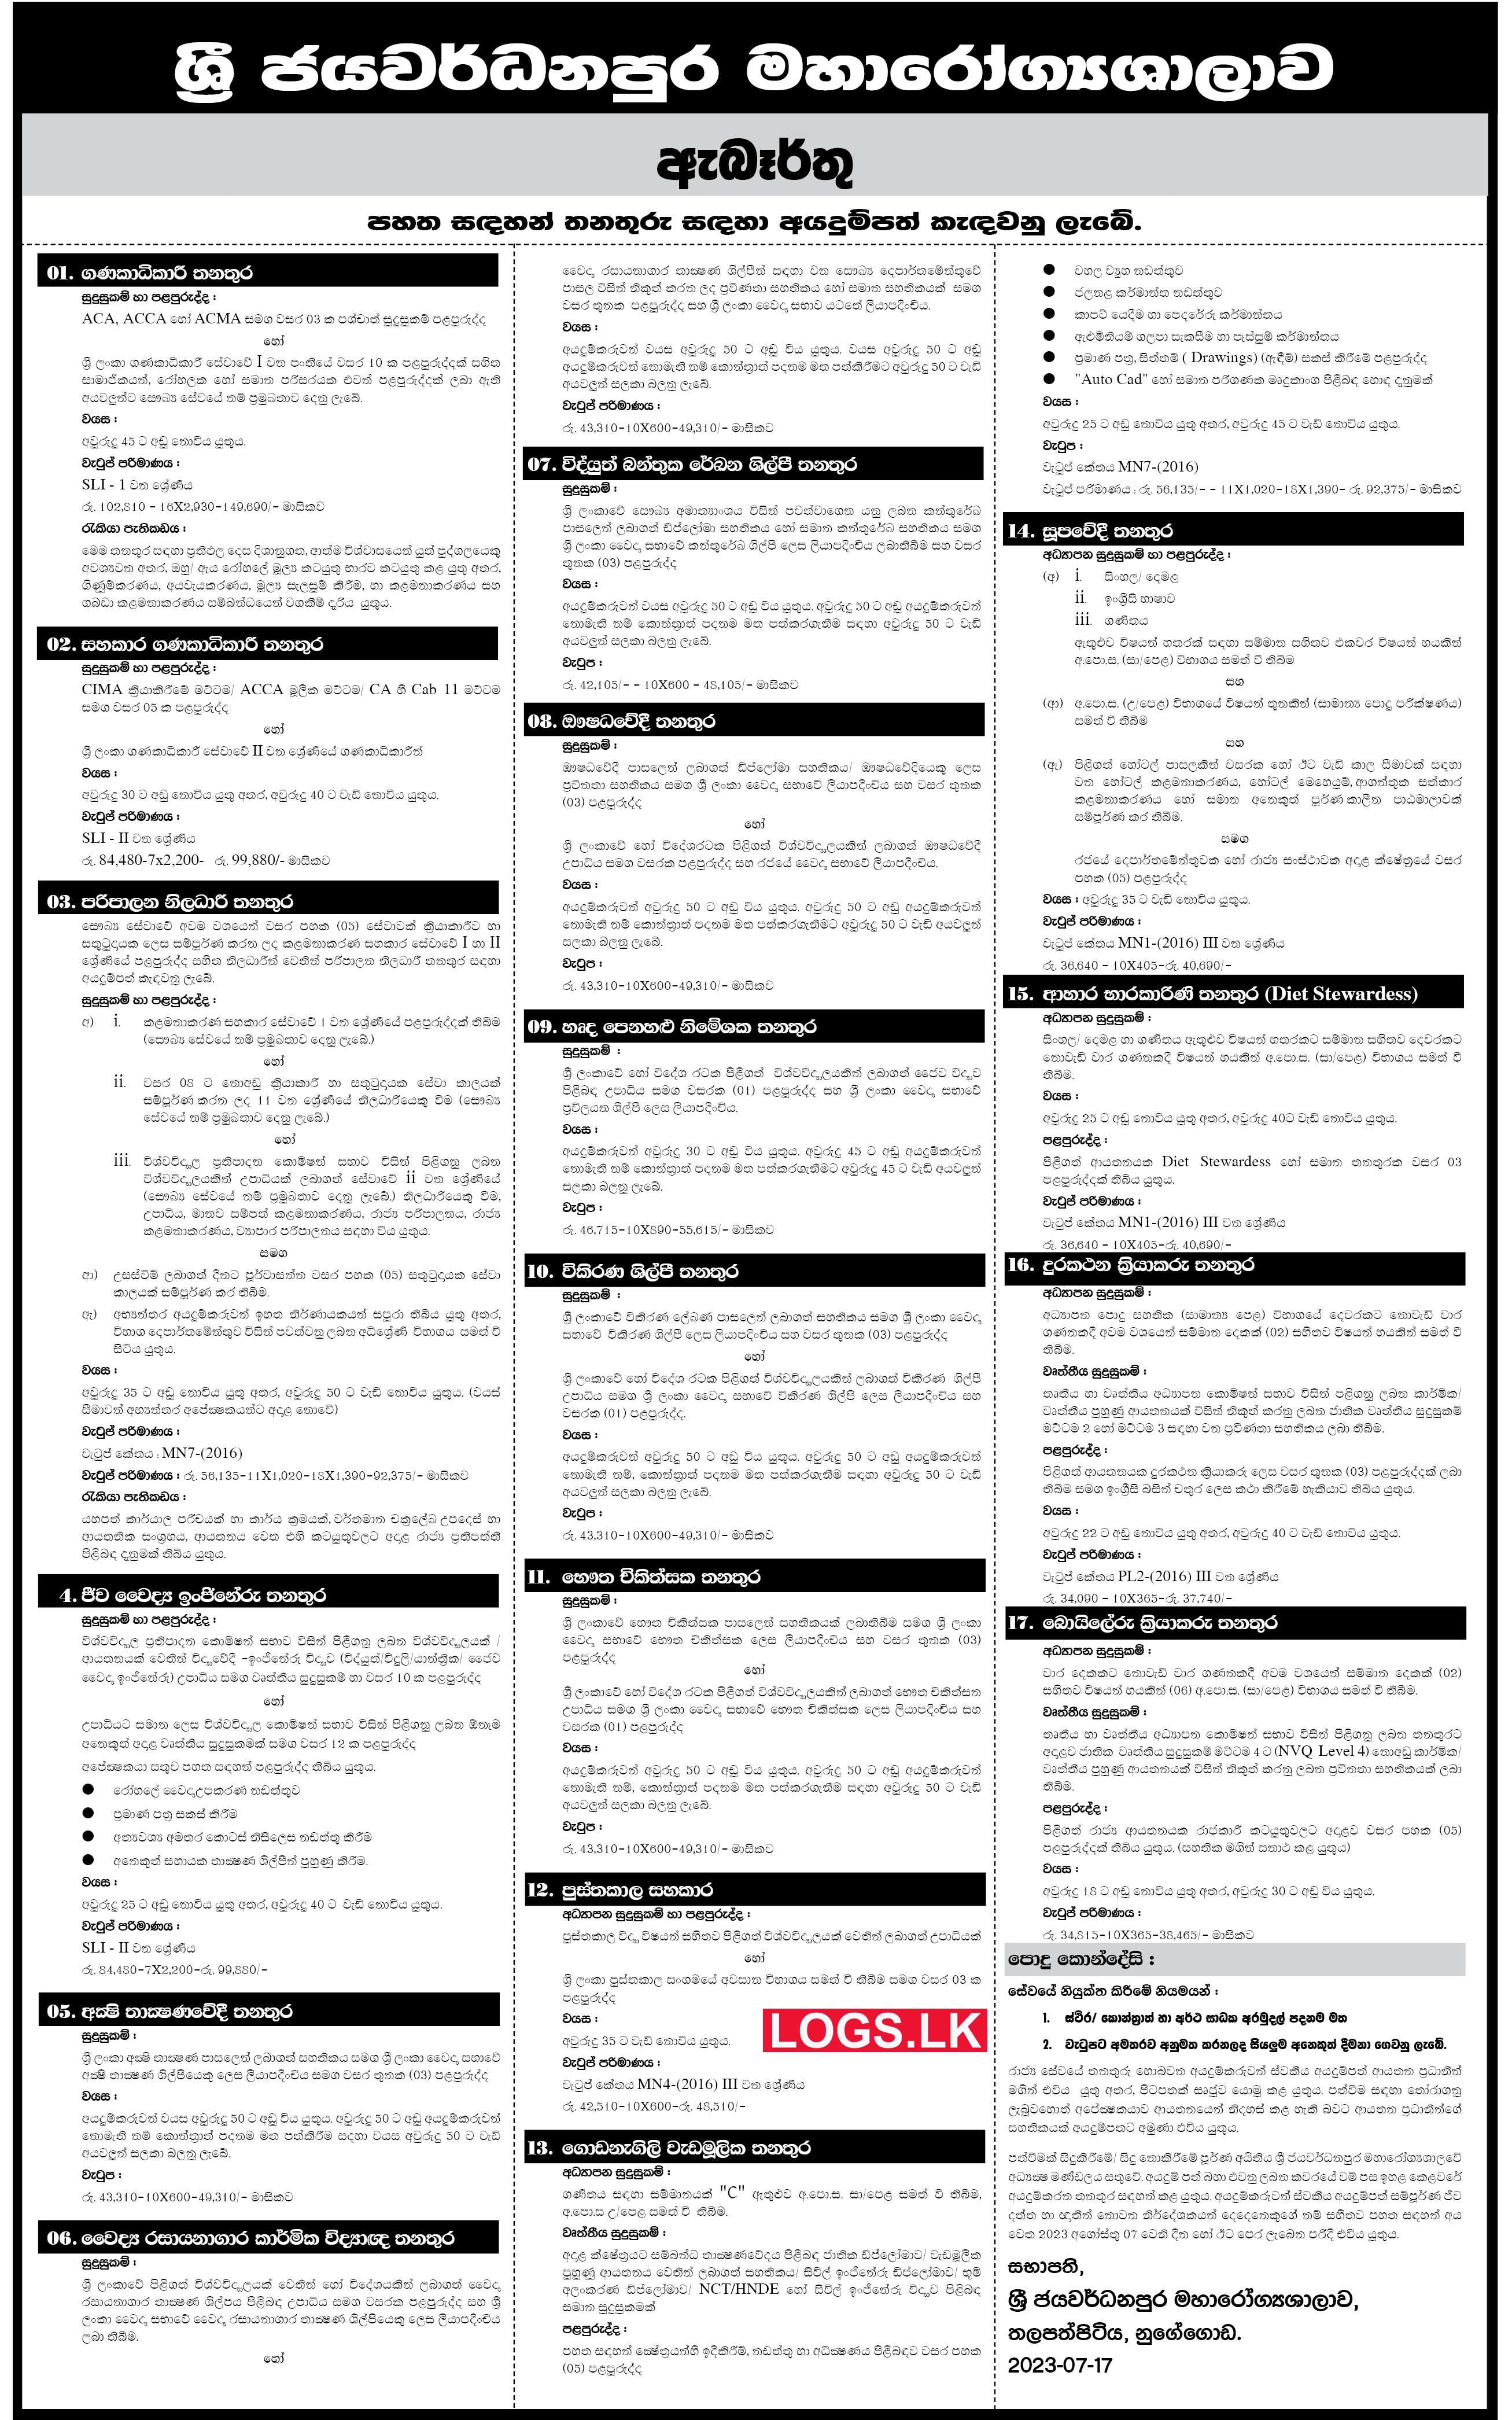 Sri Jayewardenepura General Hospital Job Vacancies 2023 Application Form, Details Download